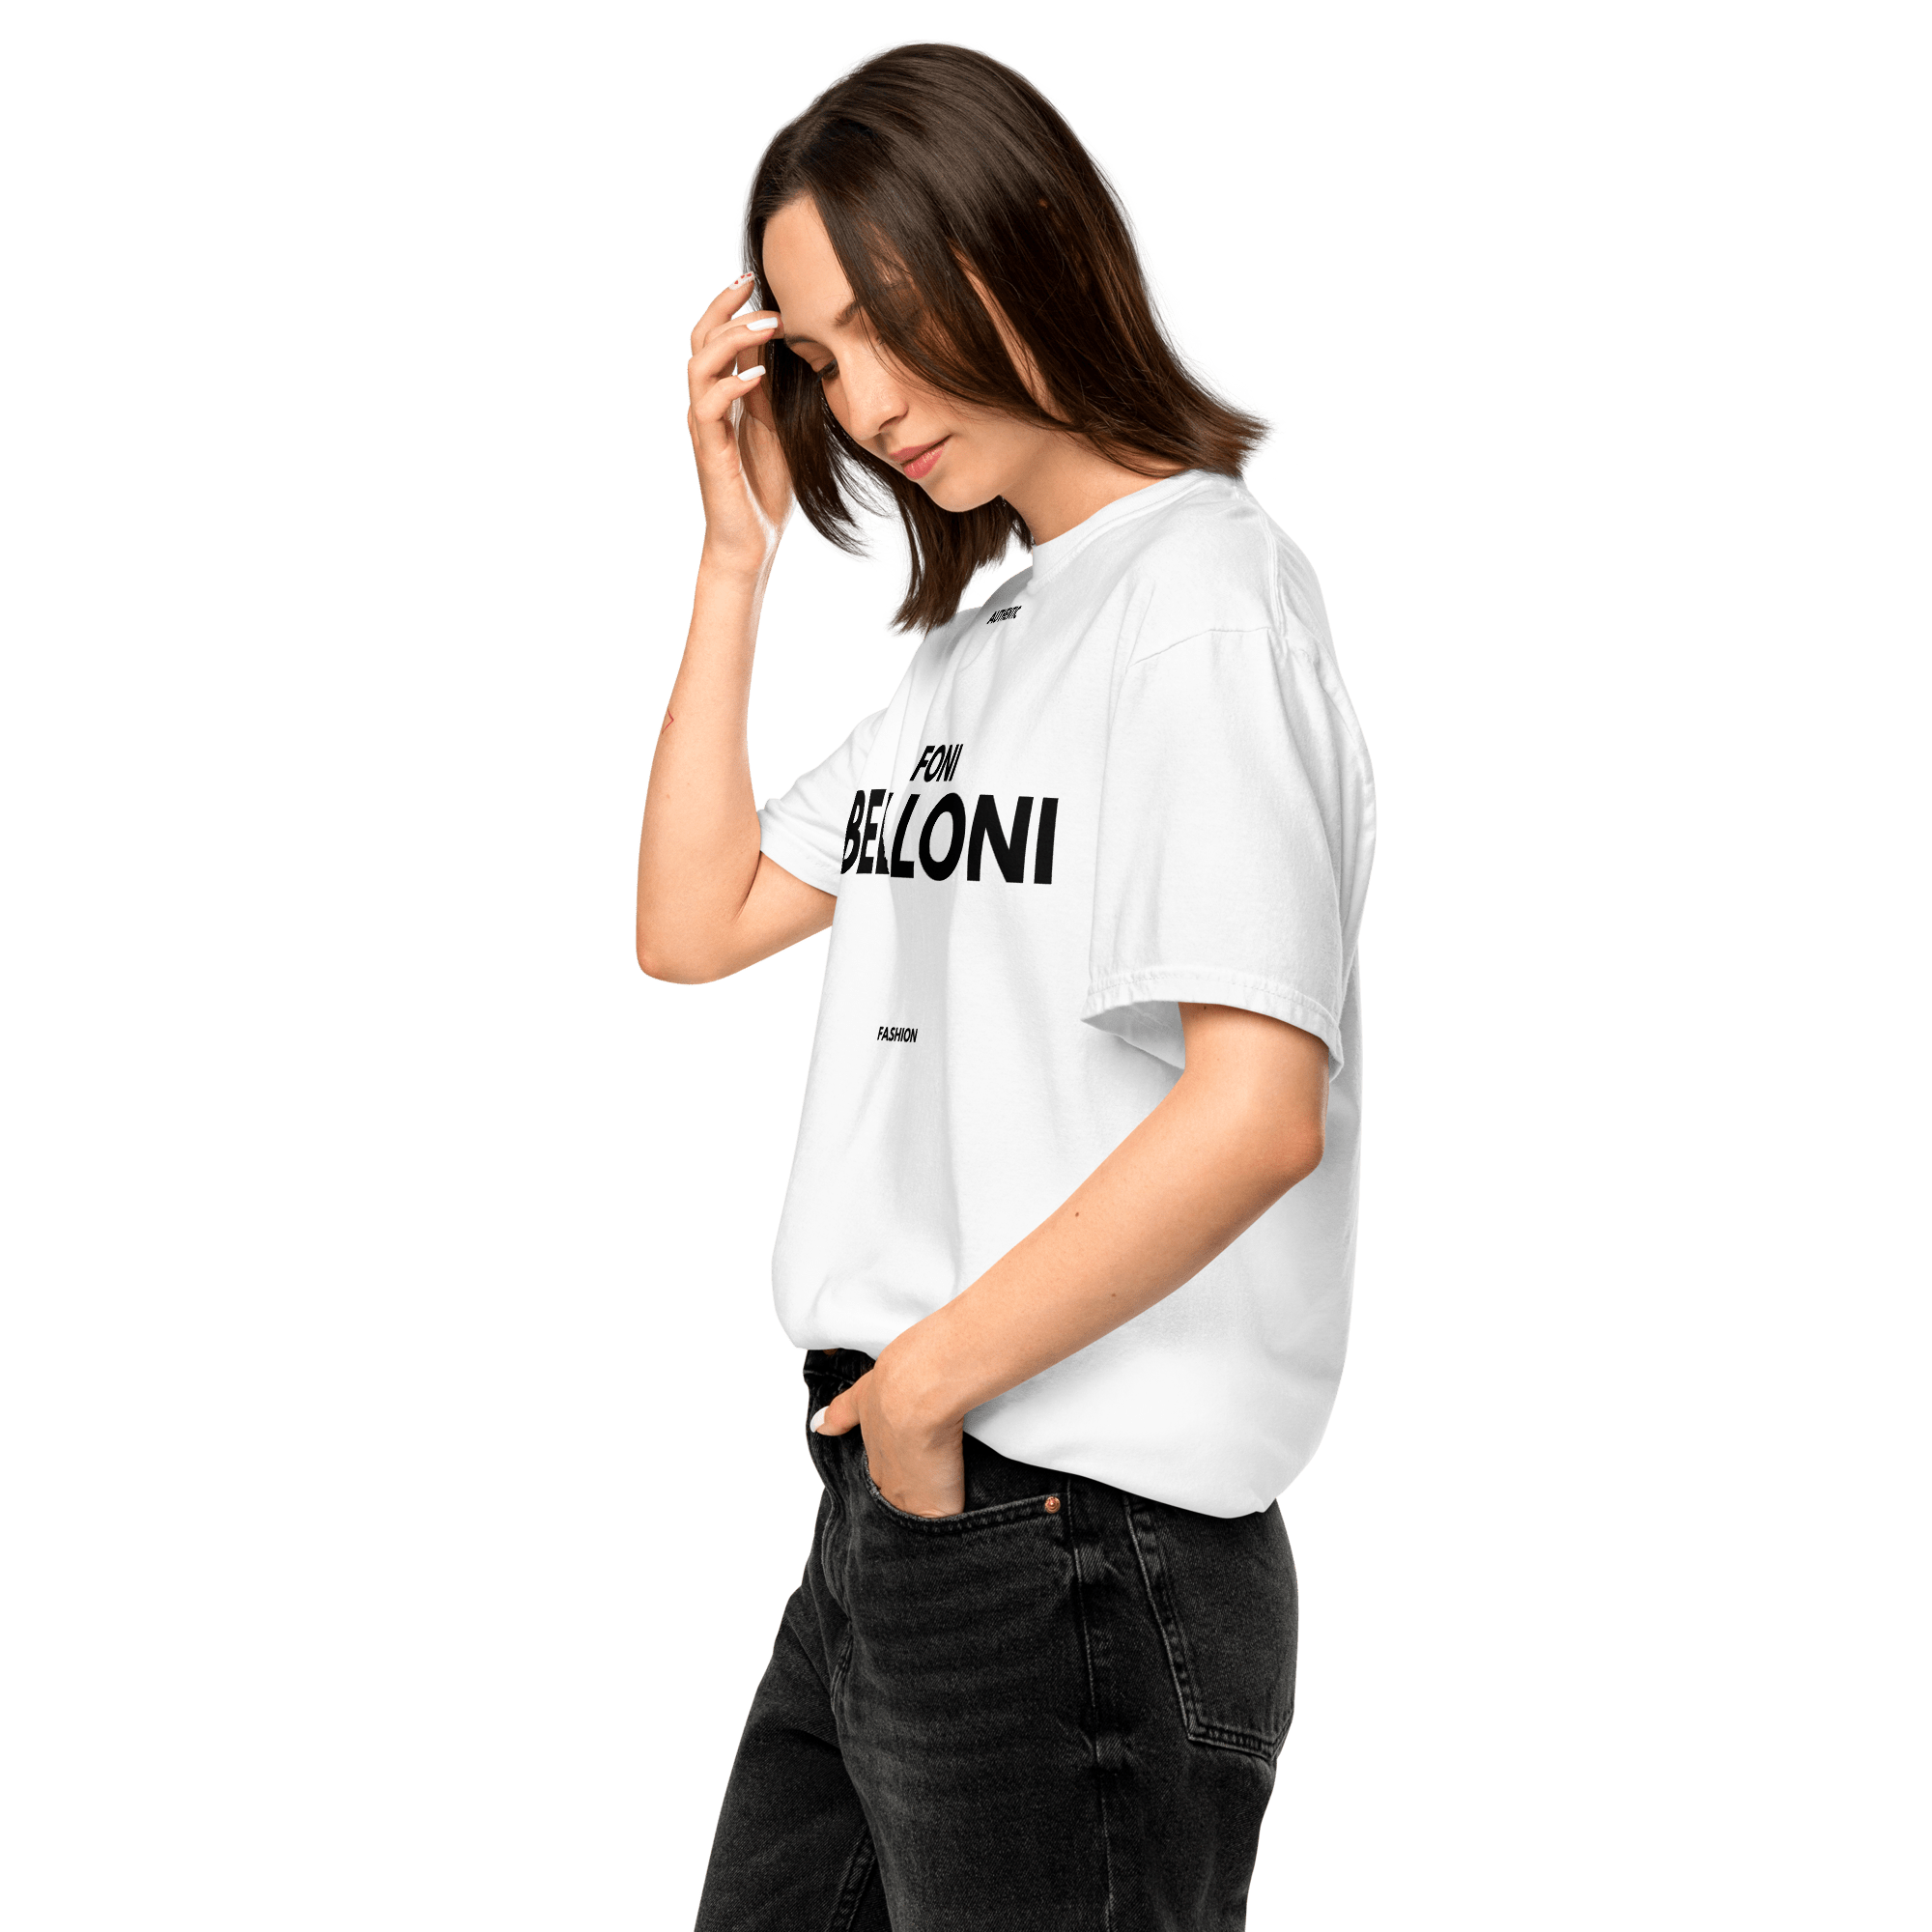 Foni Belloni Authentic Fashion T-Shirt | Garment-Dyed Shirts & Tops Jolly & Goode